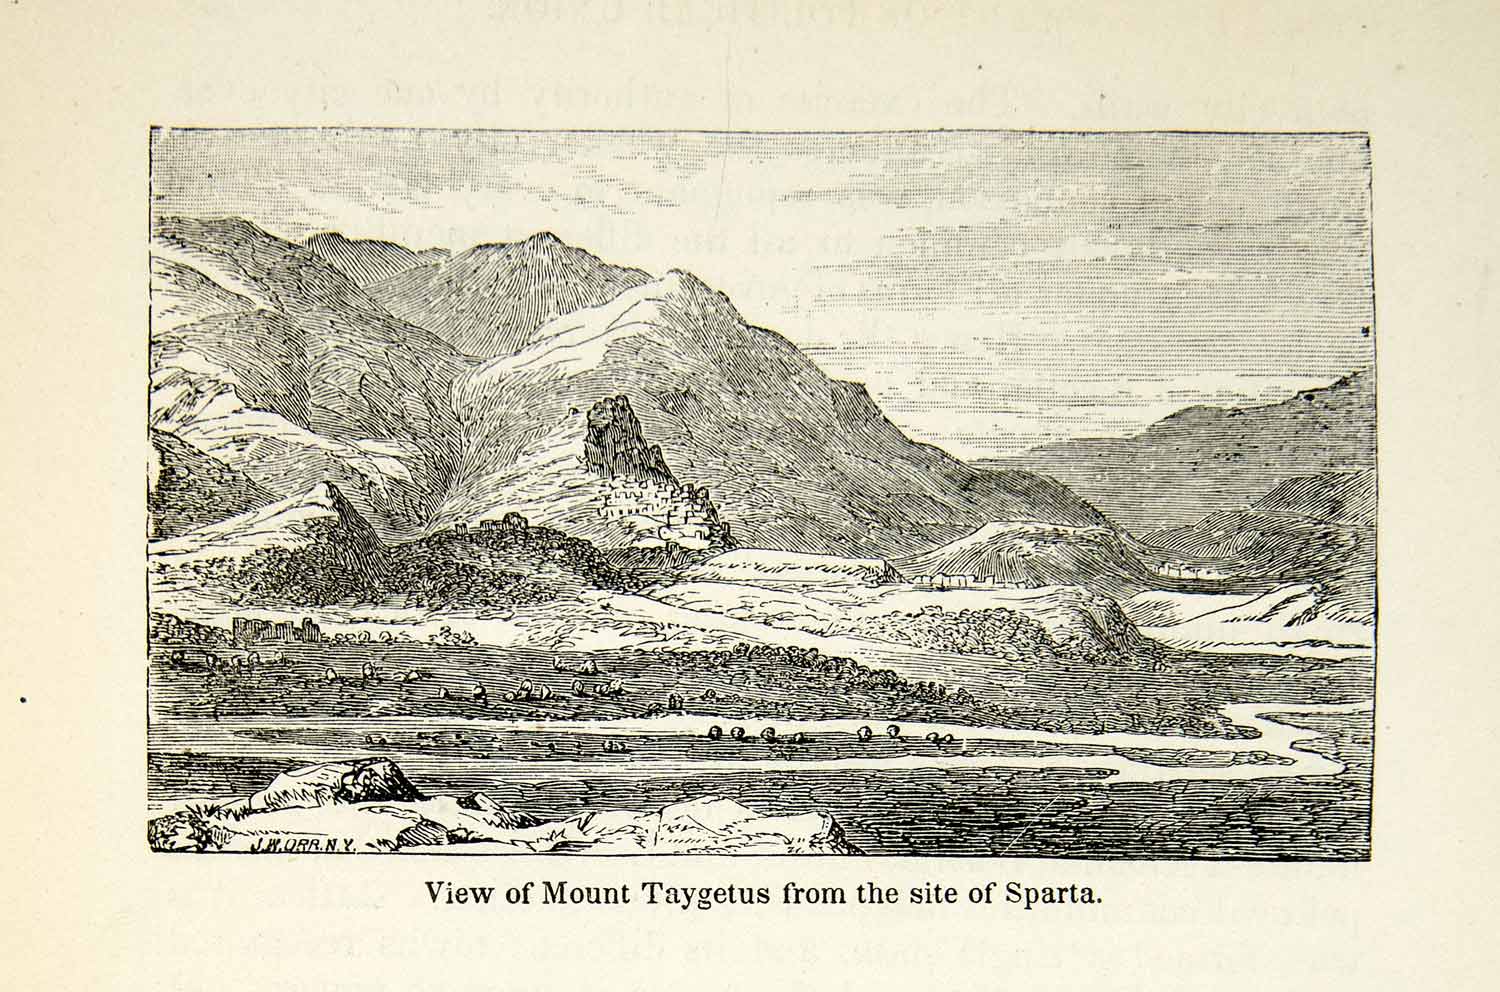 1898 Wood Engraving Mount Taygetus Sparta Greece Landscape Mountain River XEZ9